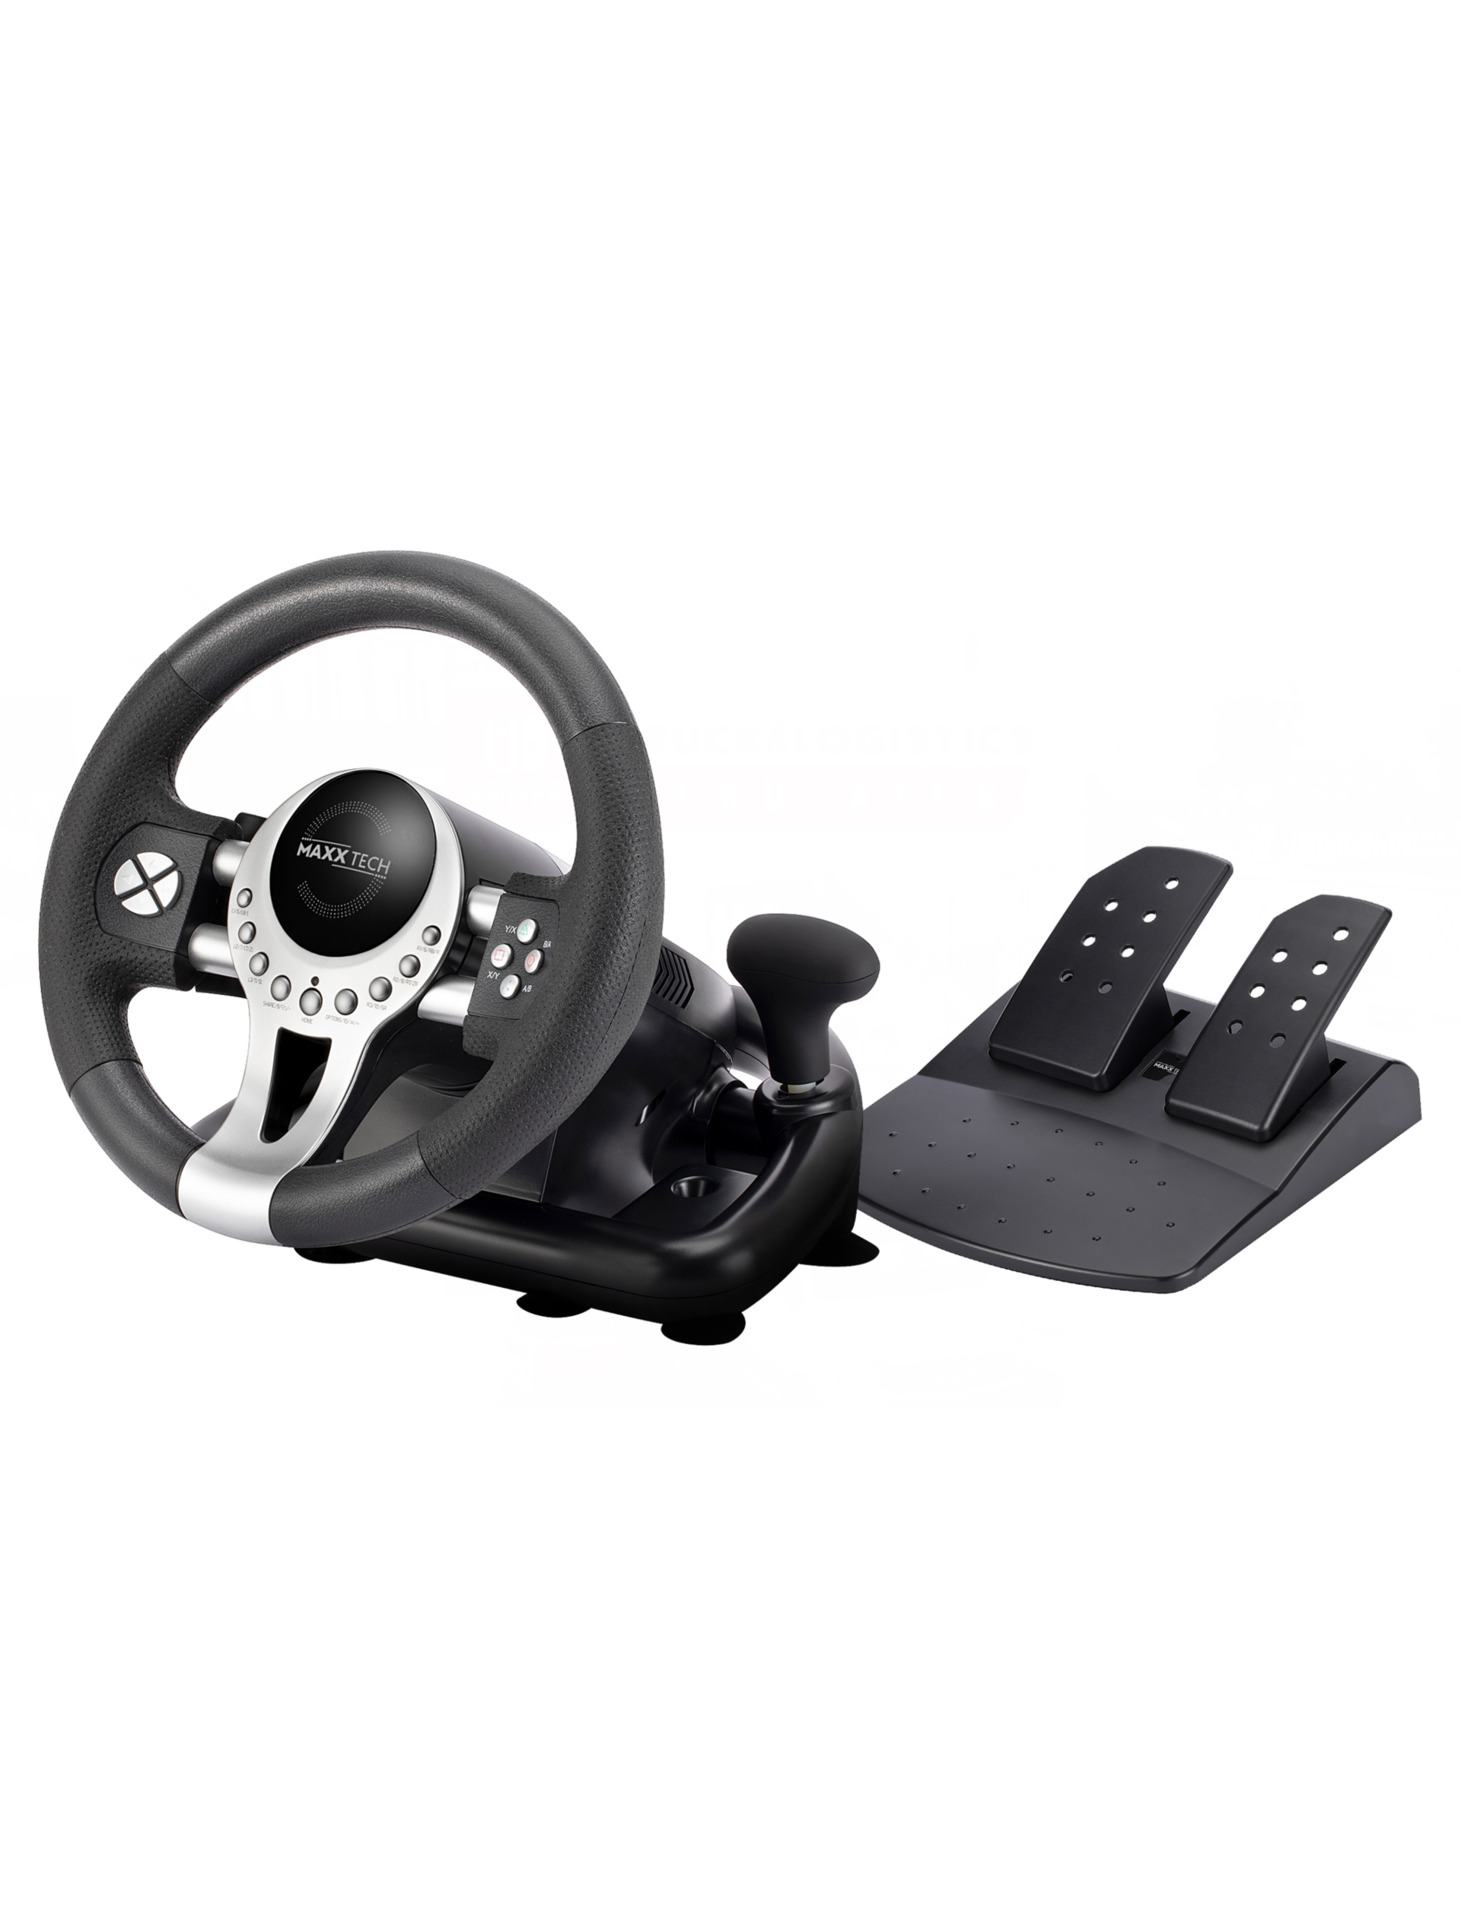 Sada volantu a pedálů Pro Racing Wheel Kit (PC, Xbox, PlayStation, Switch) (PC)